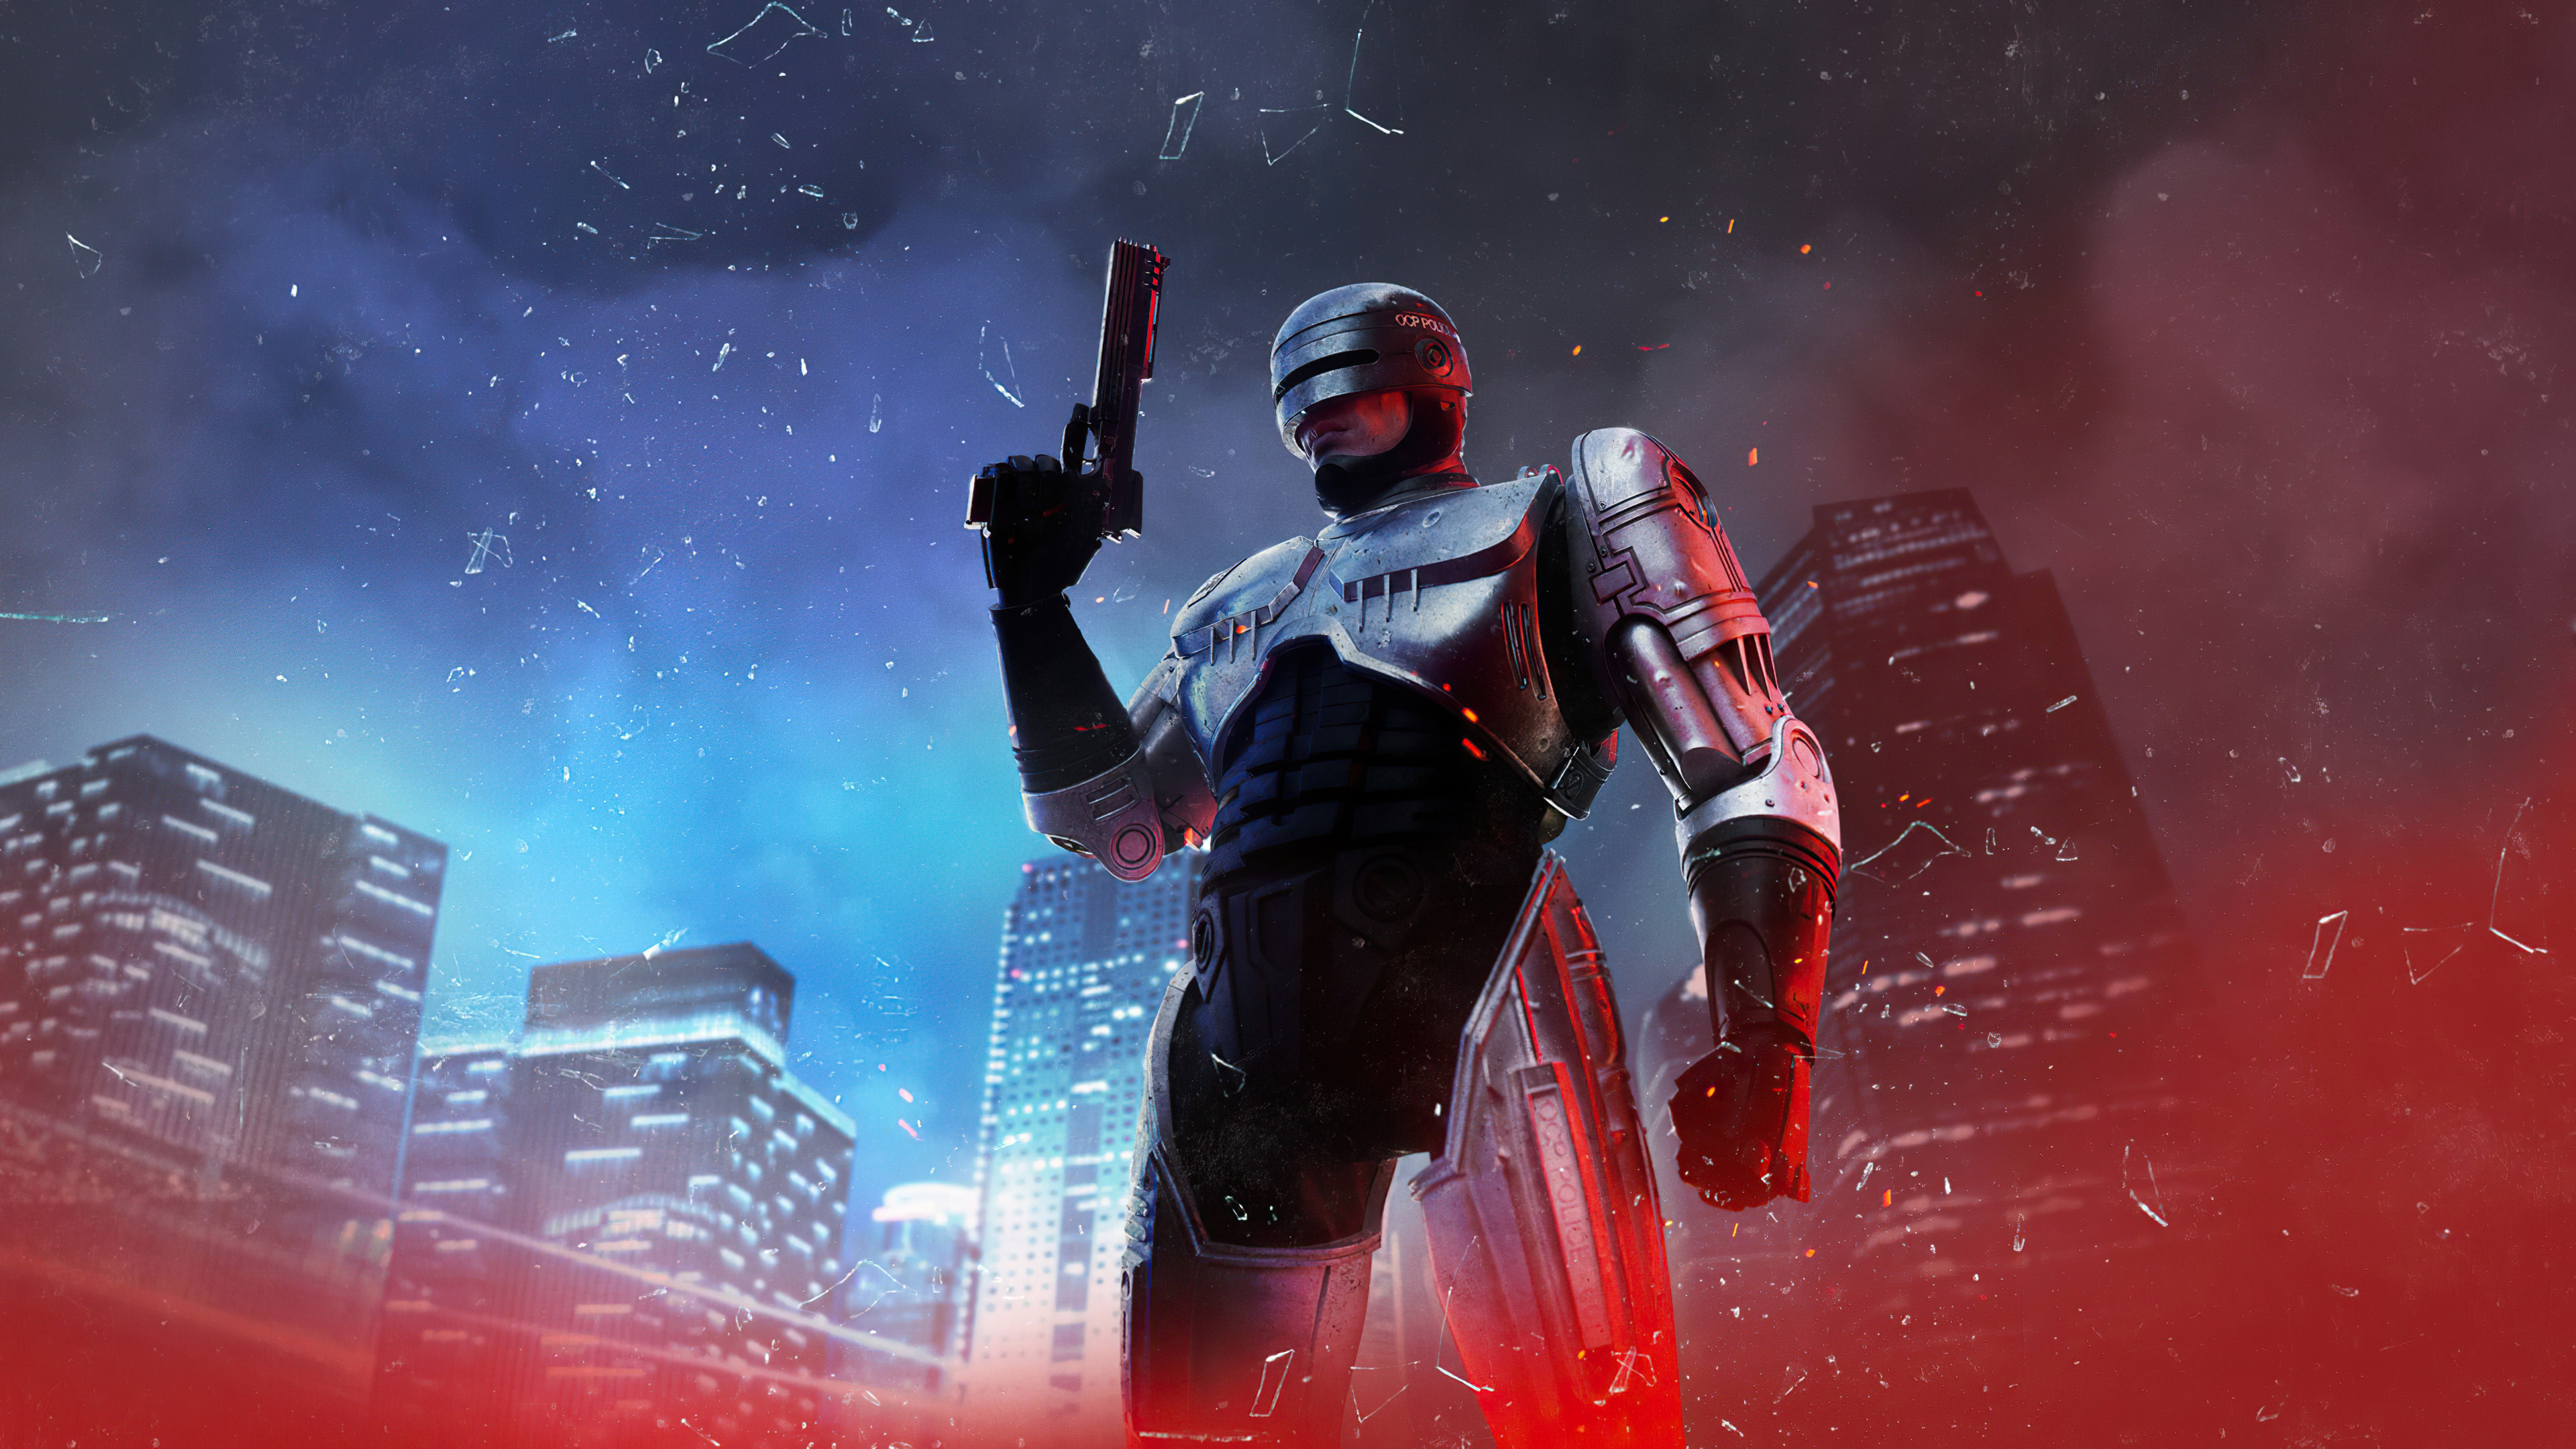 General 3840x2160 RoboCop science fiction cyborg artwork digital art video games gun city city lights building low-angle